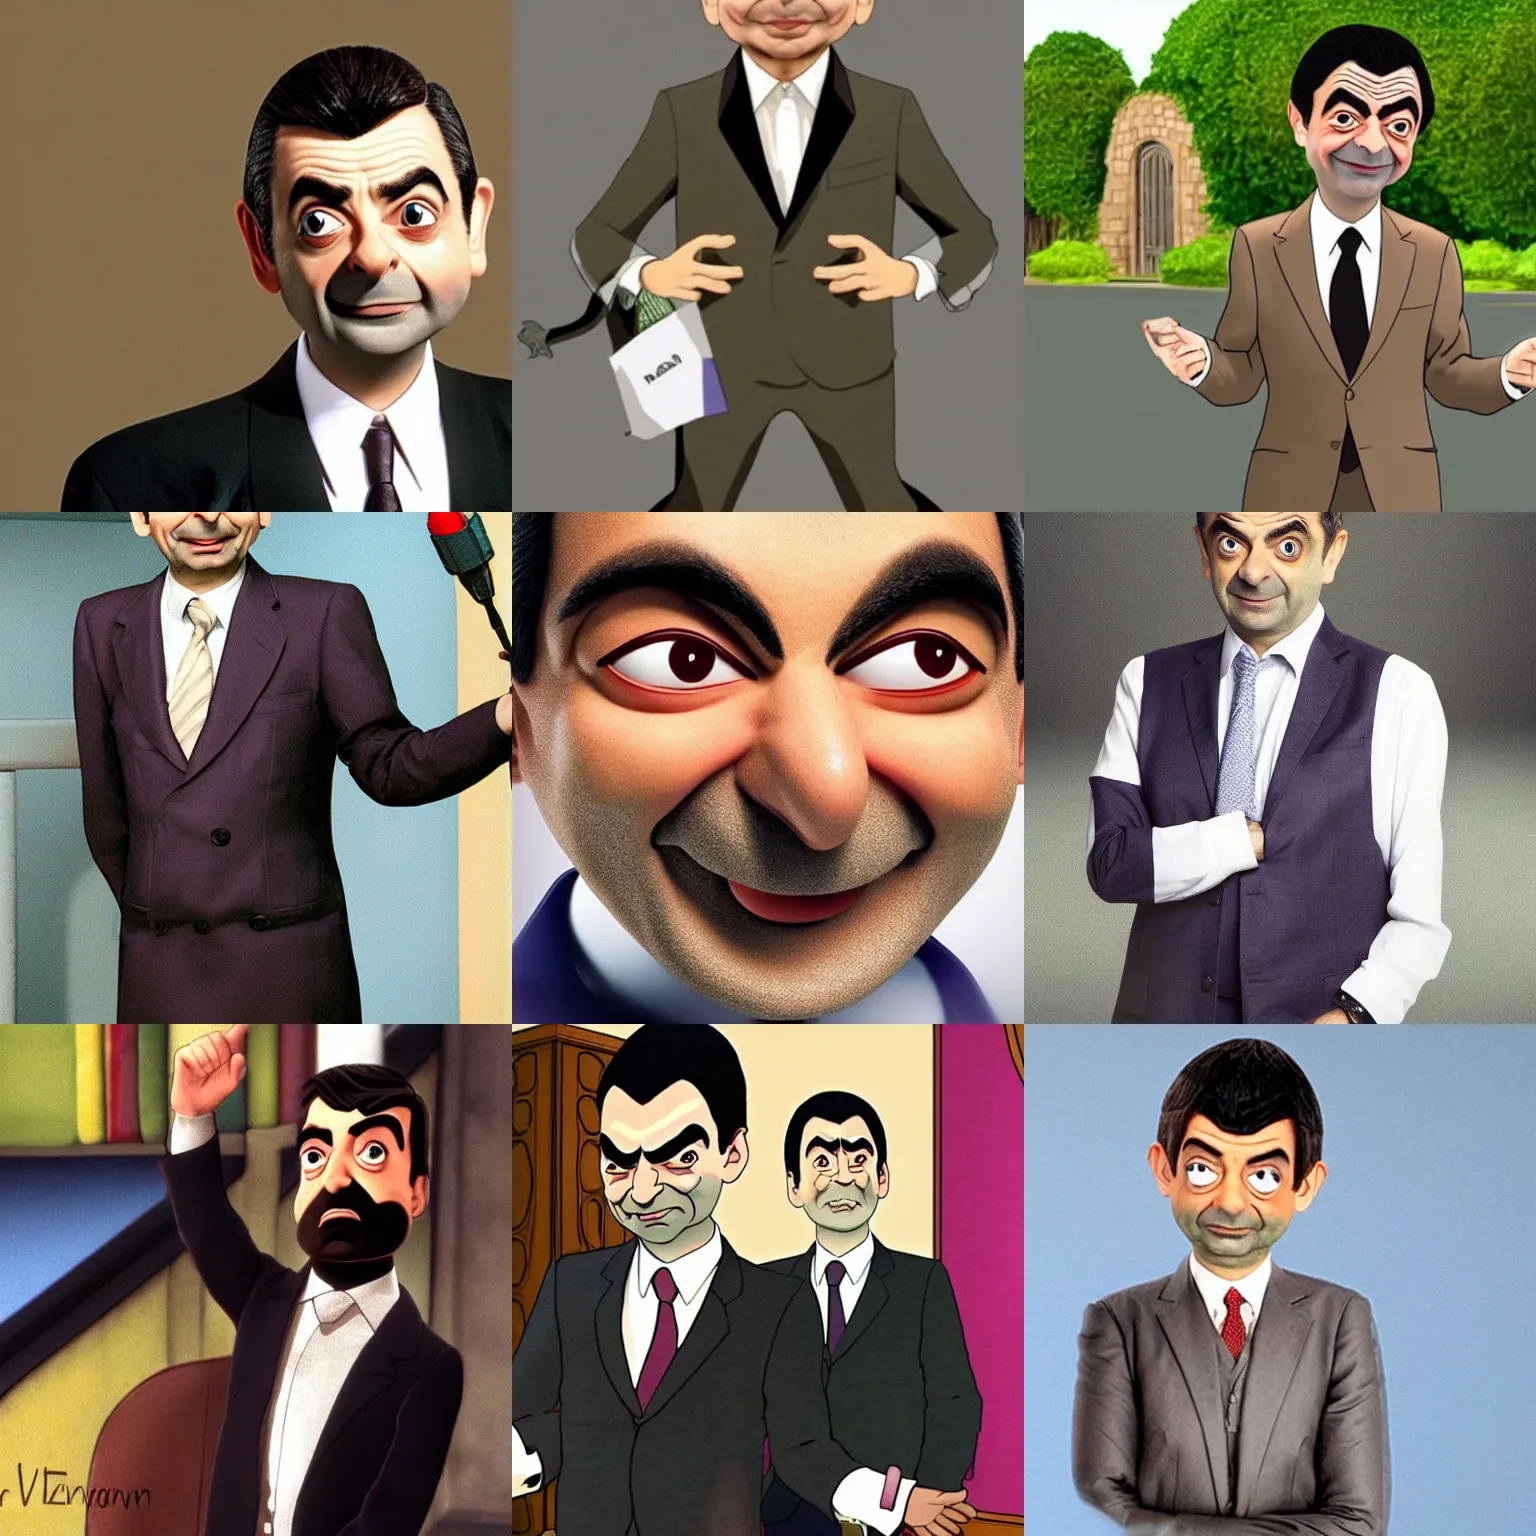 Prompt: Mr. Bean (Rowan Atkinson), as Mézga Géza in the animation Mézga család